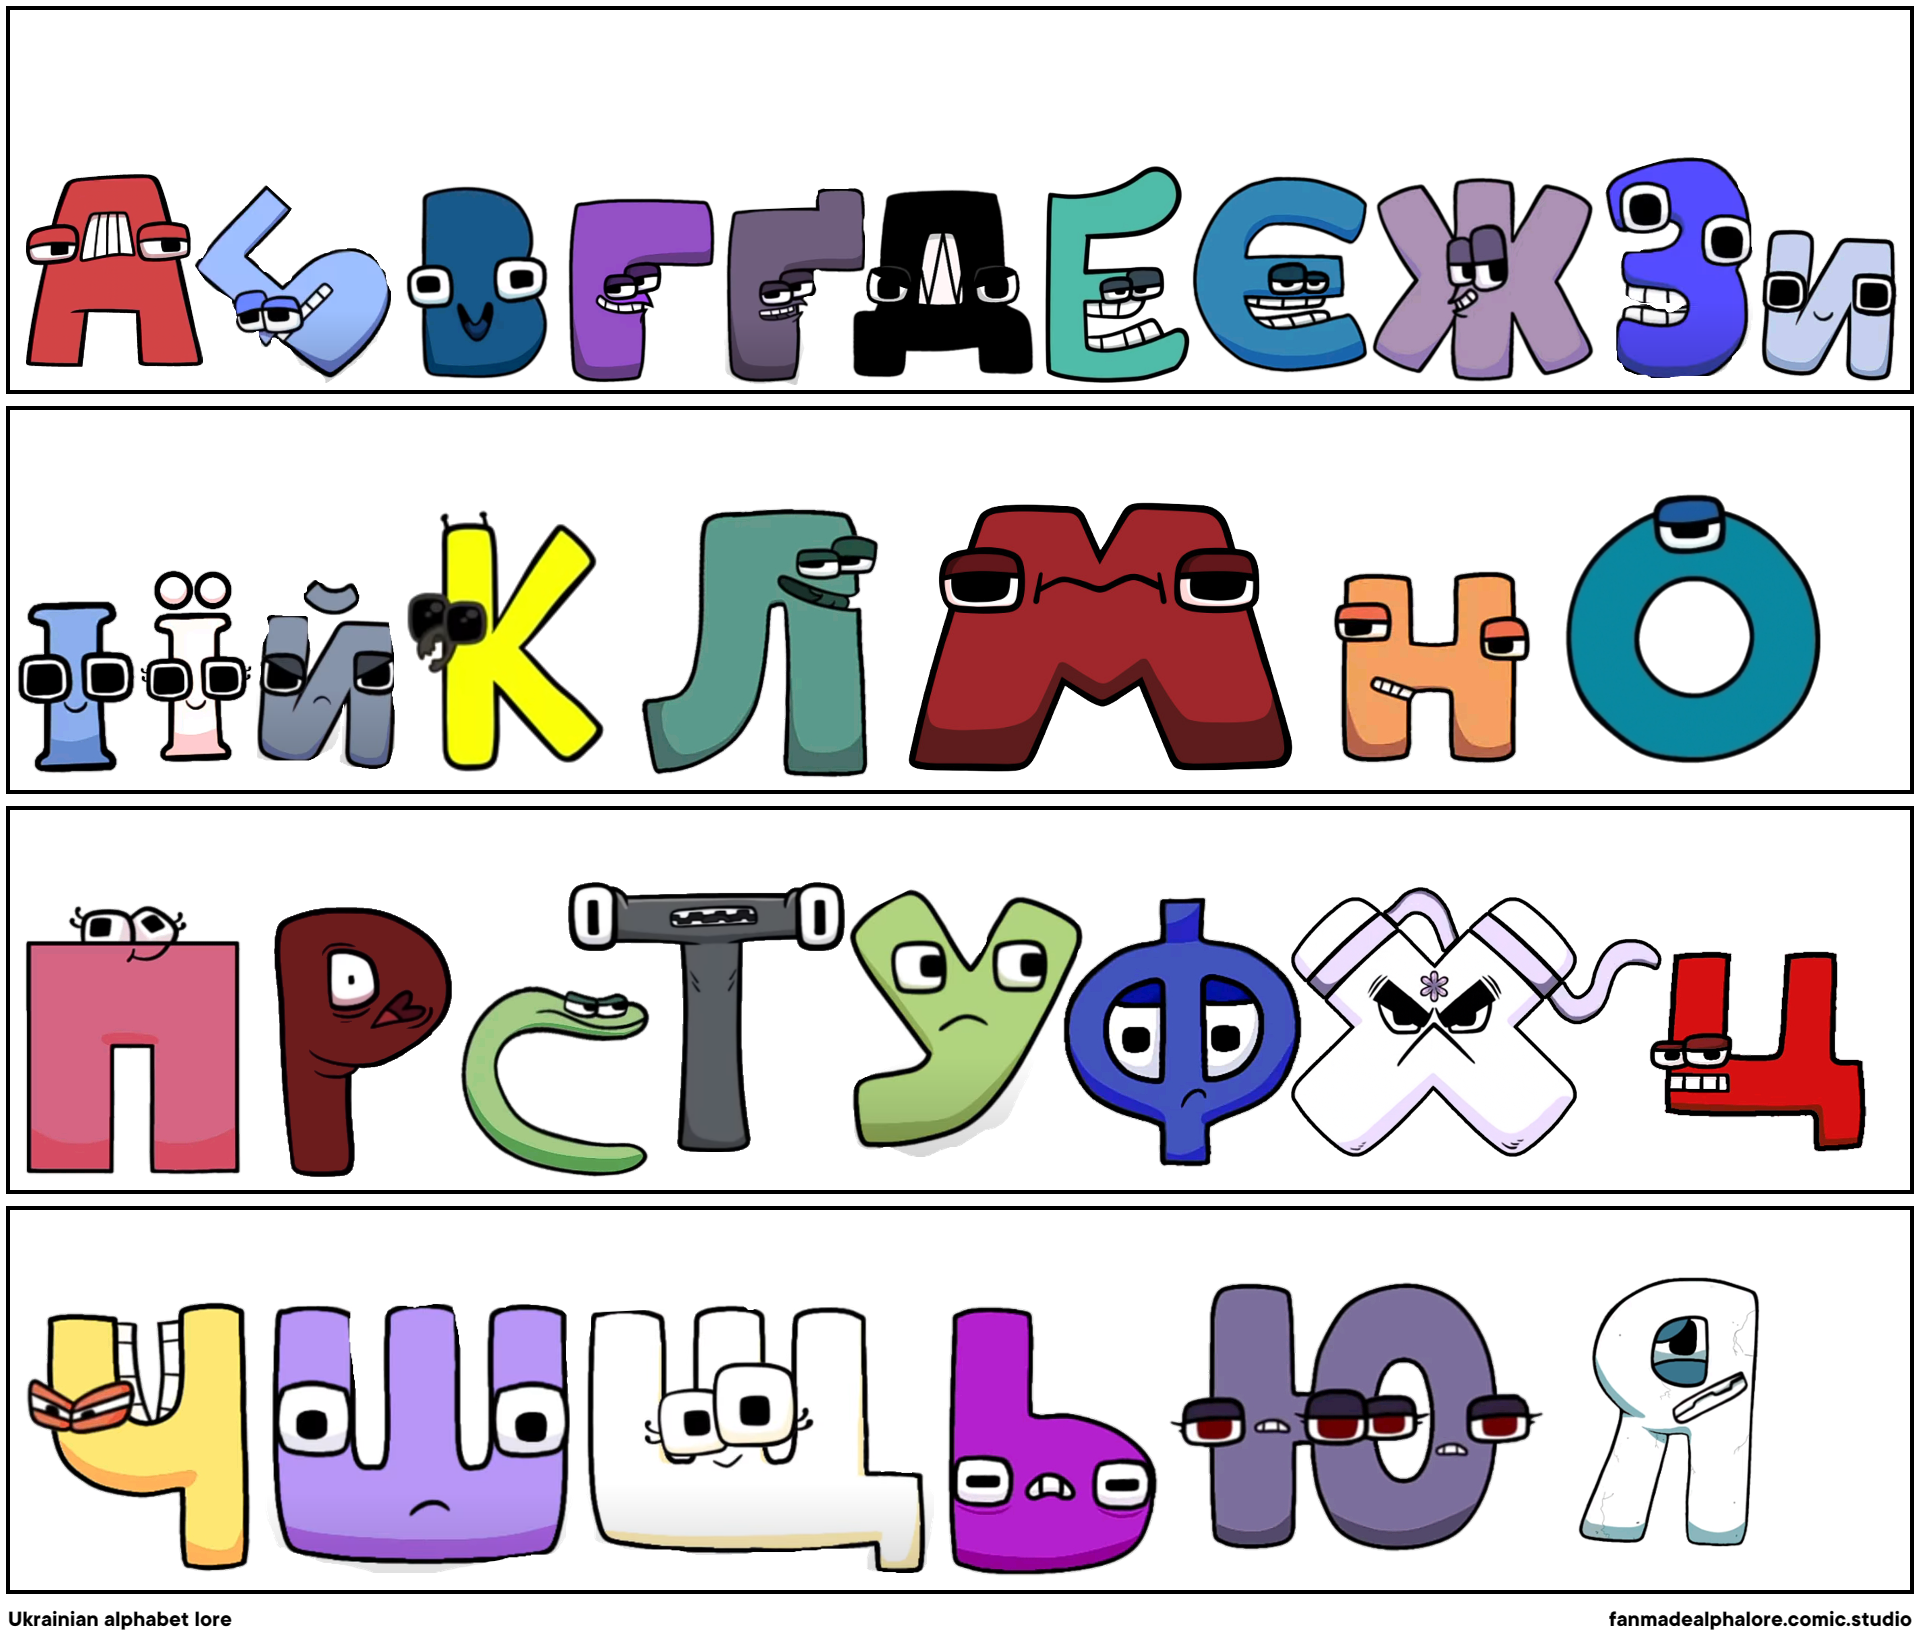 Ukrainian Alphabet Lore Live Subscriber Count